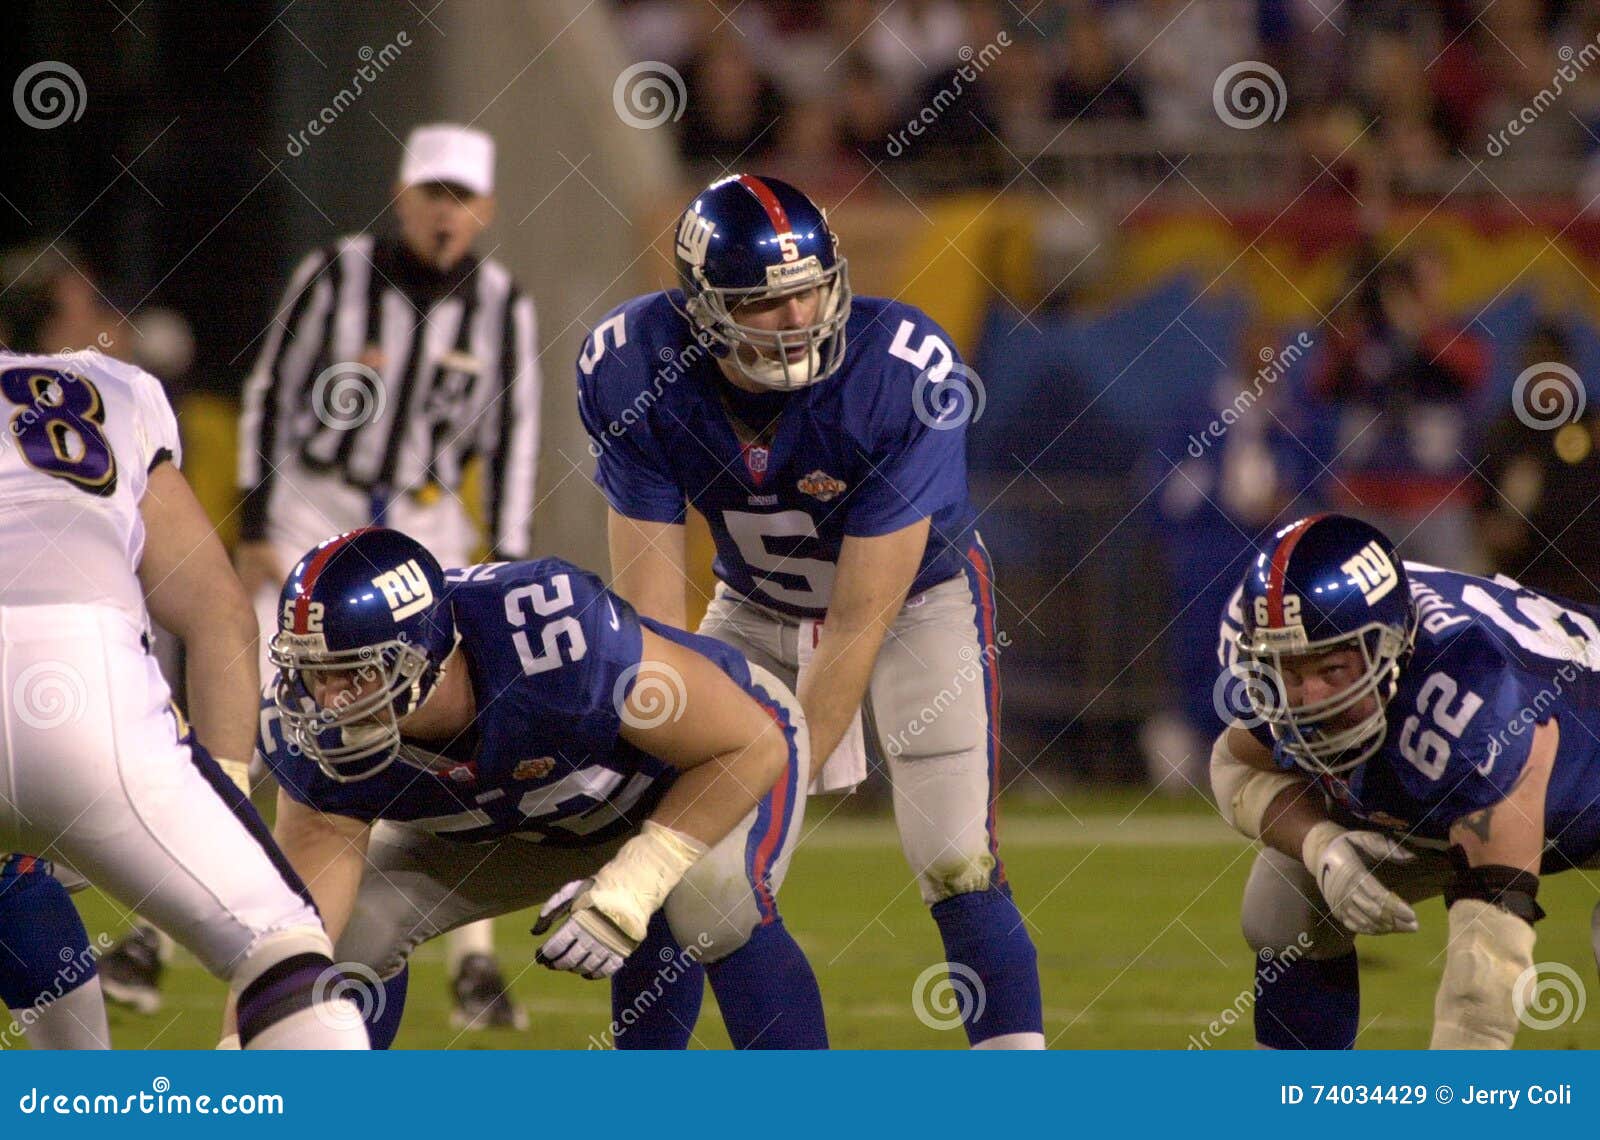 Kerry Collins, Super Bowl XXXV Editorial Stock Image - Image of league,  quarterback: 74034429